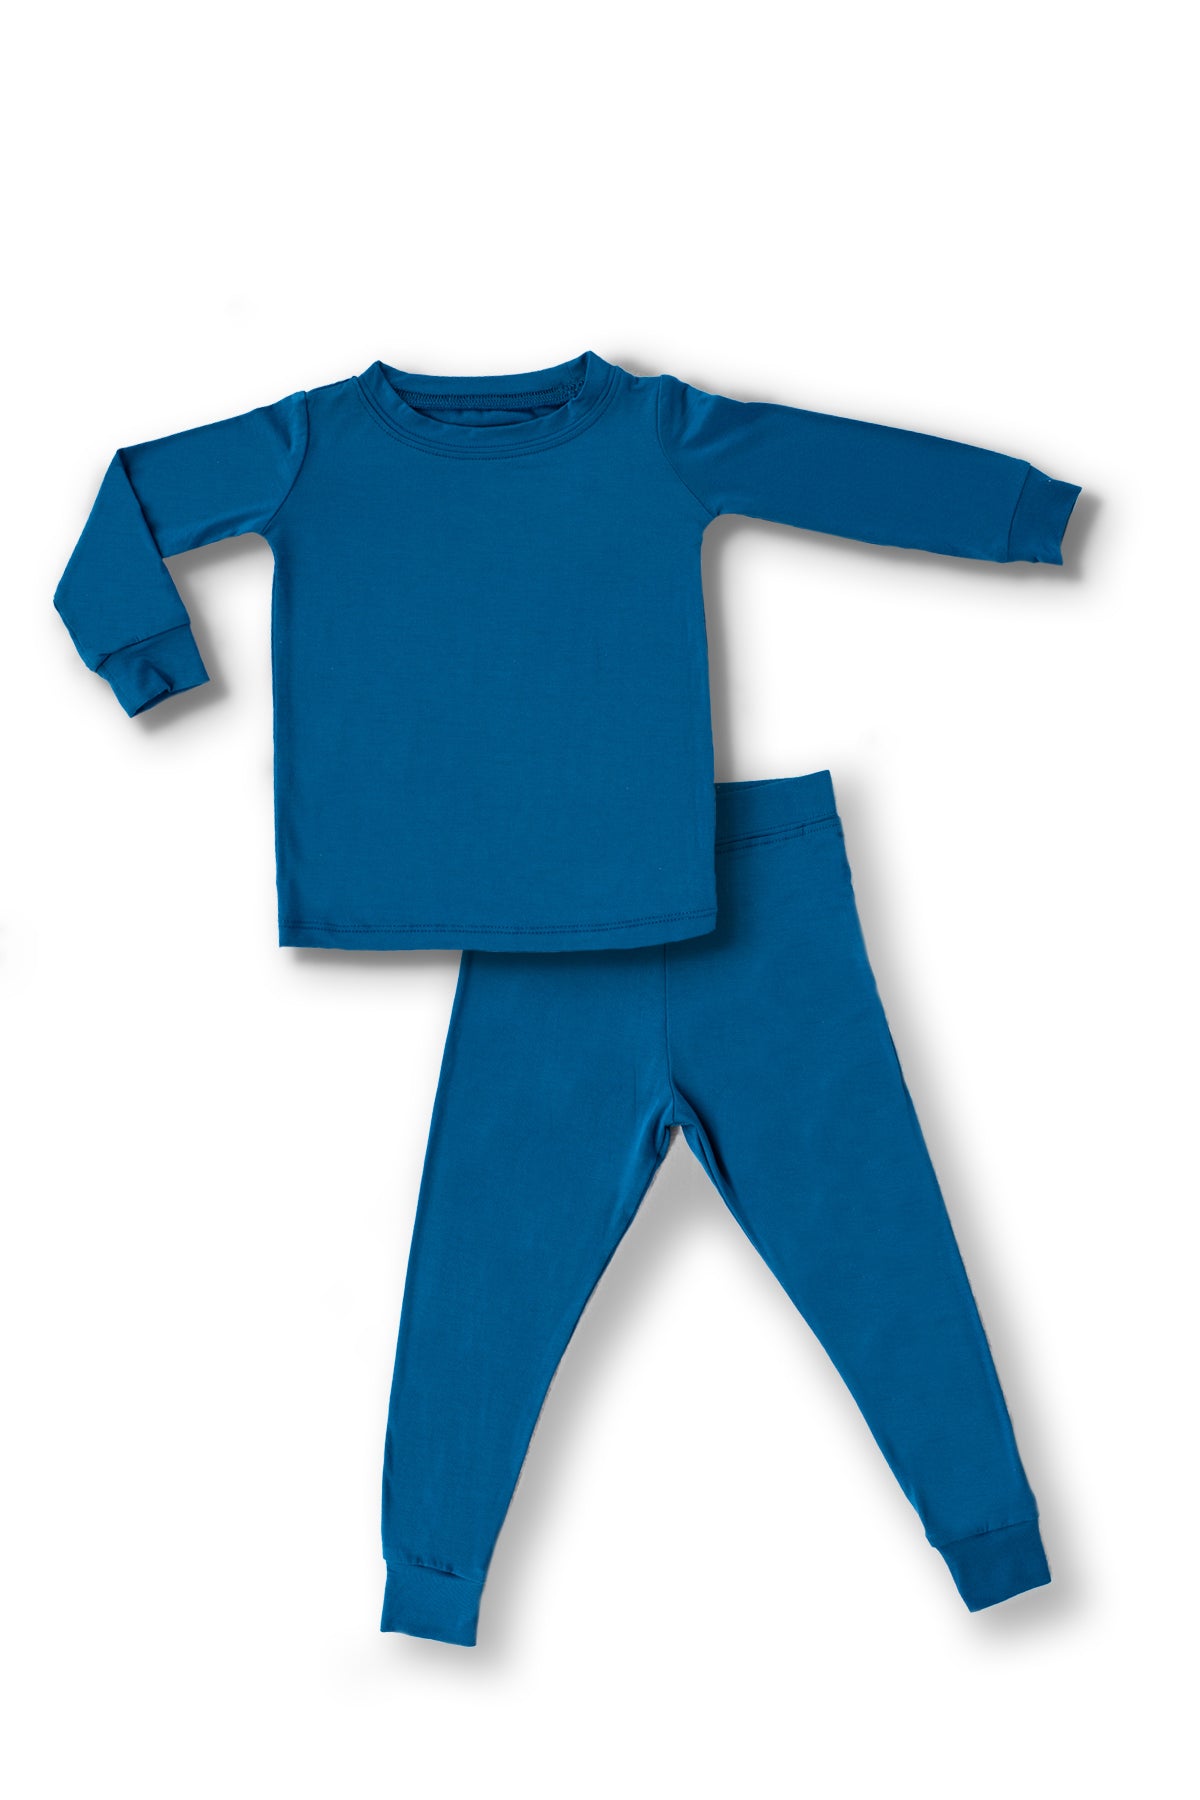 Unisex Children Pajamas Solid Color Viscose Kid Winter Thermal Underwear